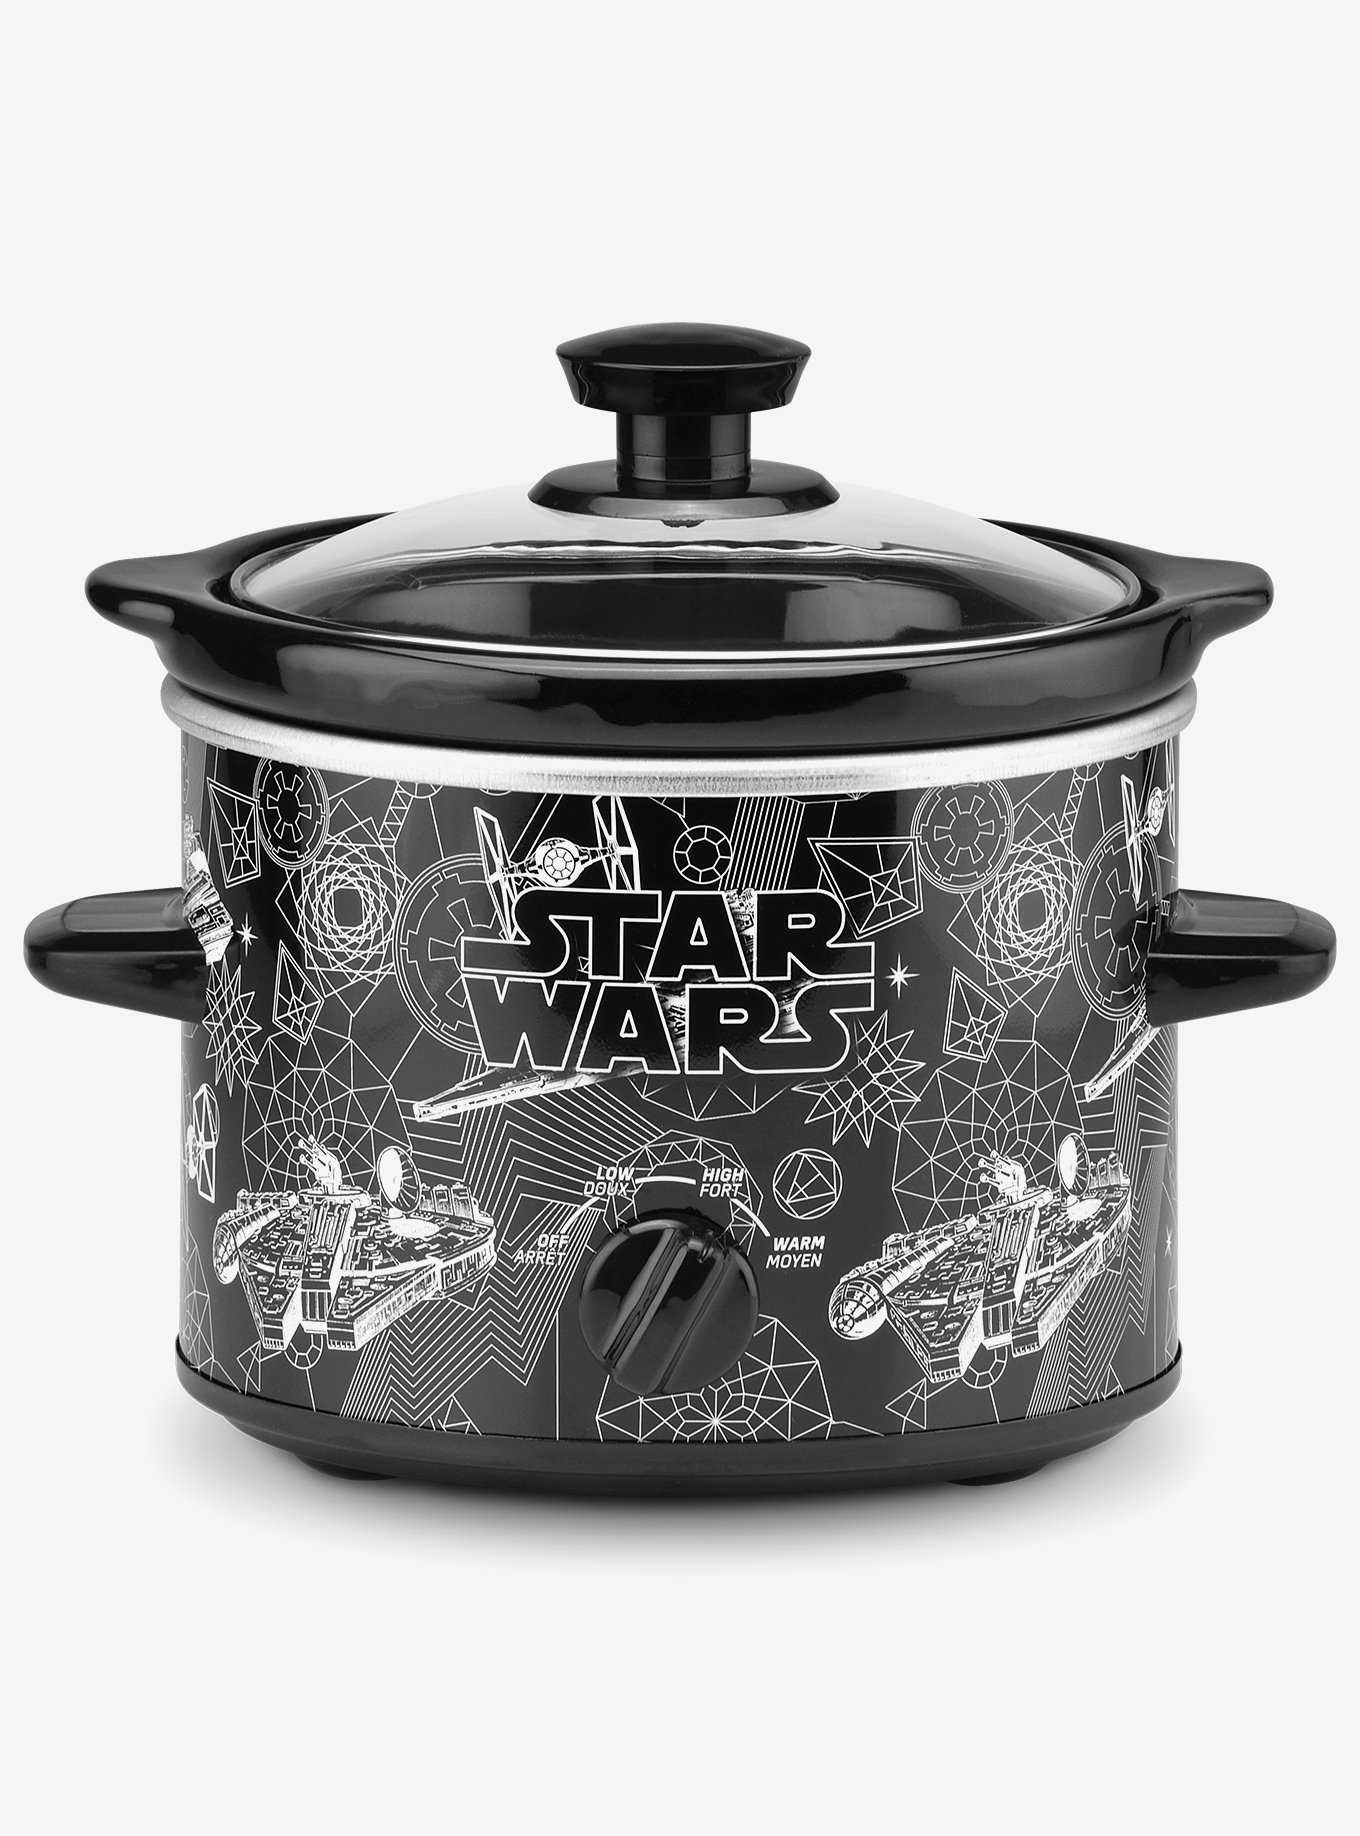 Star Wars 2-Quart Slow Cooker, , hi-res